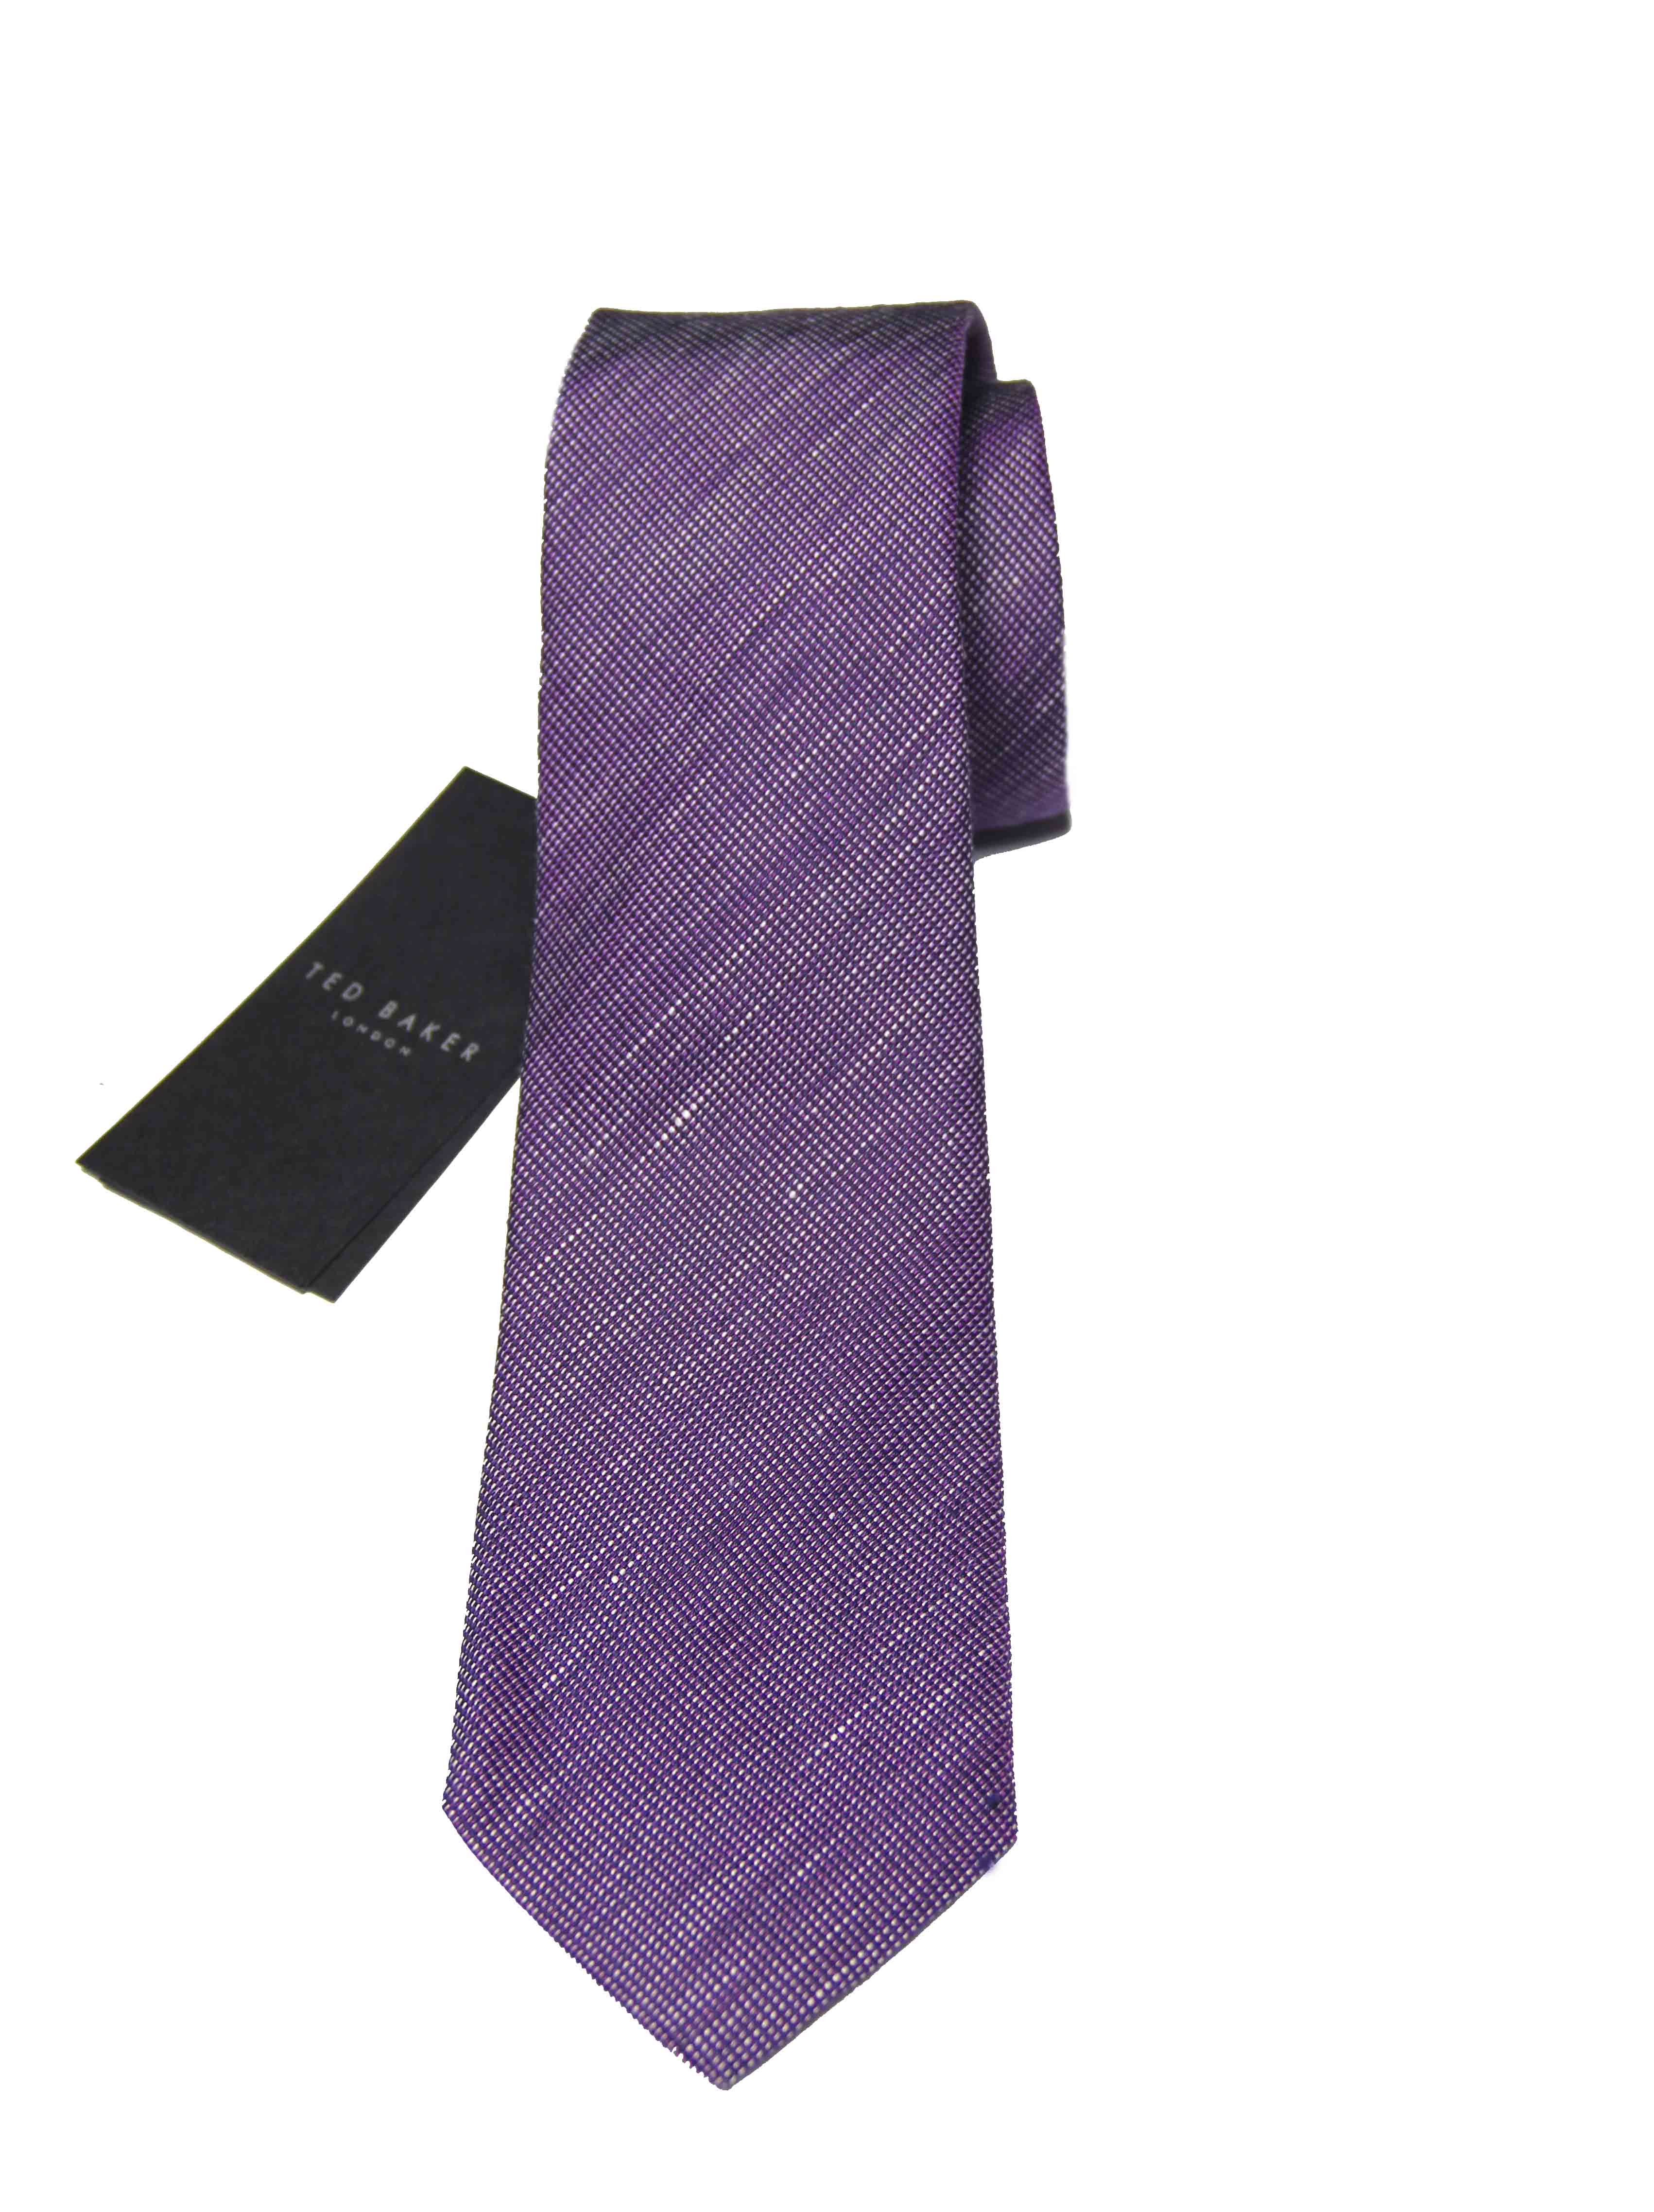 TED BAKER LONDON Italian Linen Cotton Tie Purple Men's